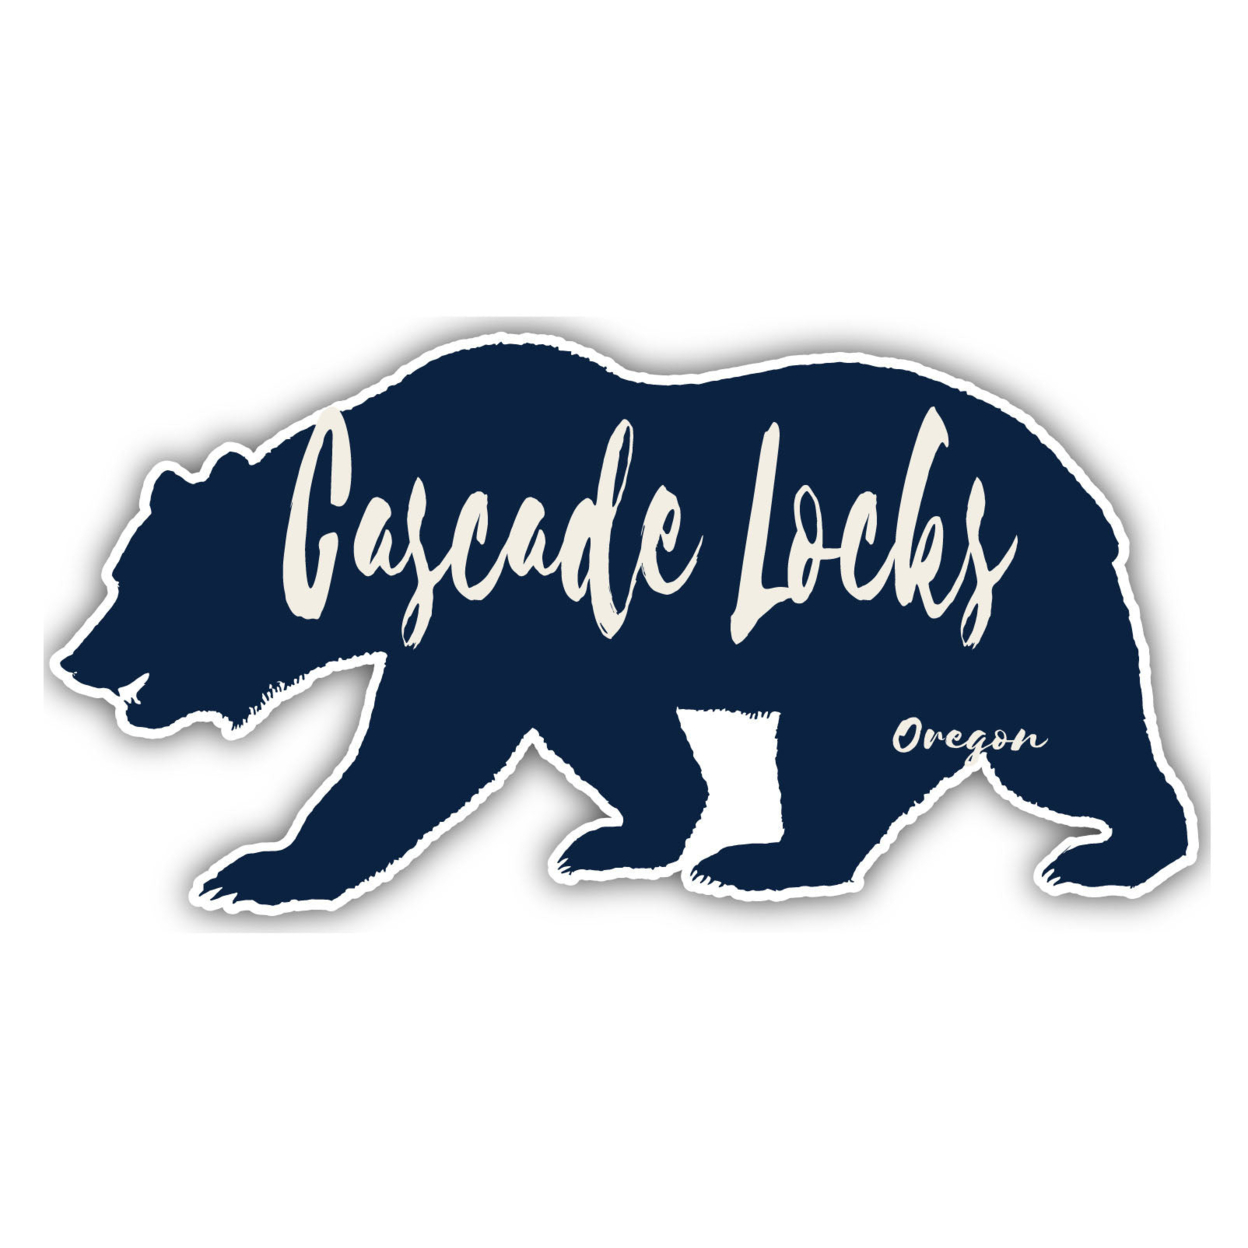 Cascade Locks Oregon Souvenir Decorative Stickers (Choose Theme And Size) - Single Unit, 12-Inch, Adventures Awaits